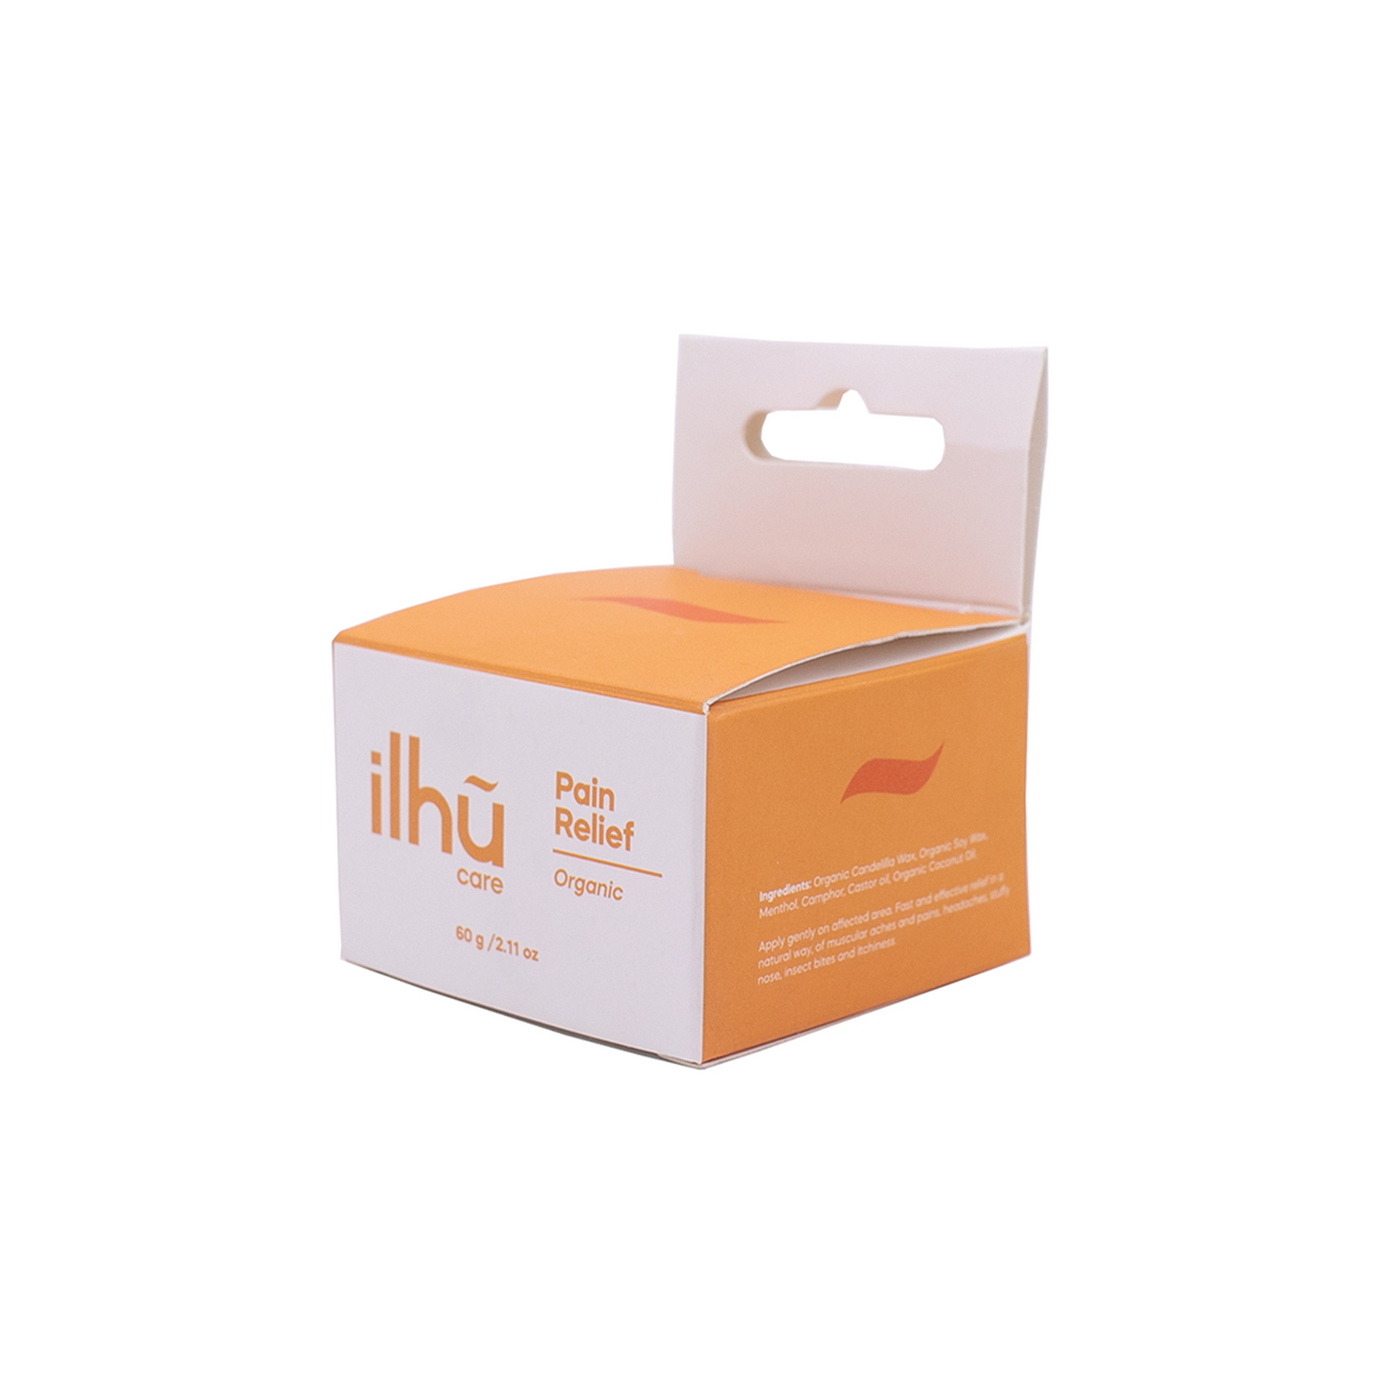 ilhu - Relief Balm 30g